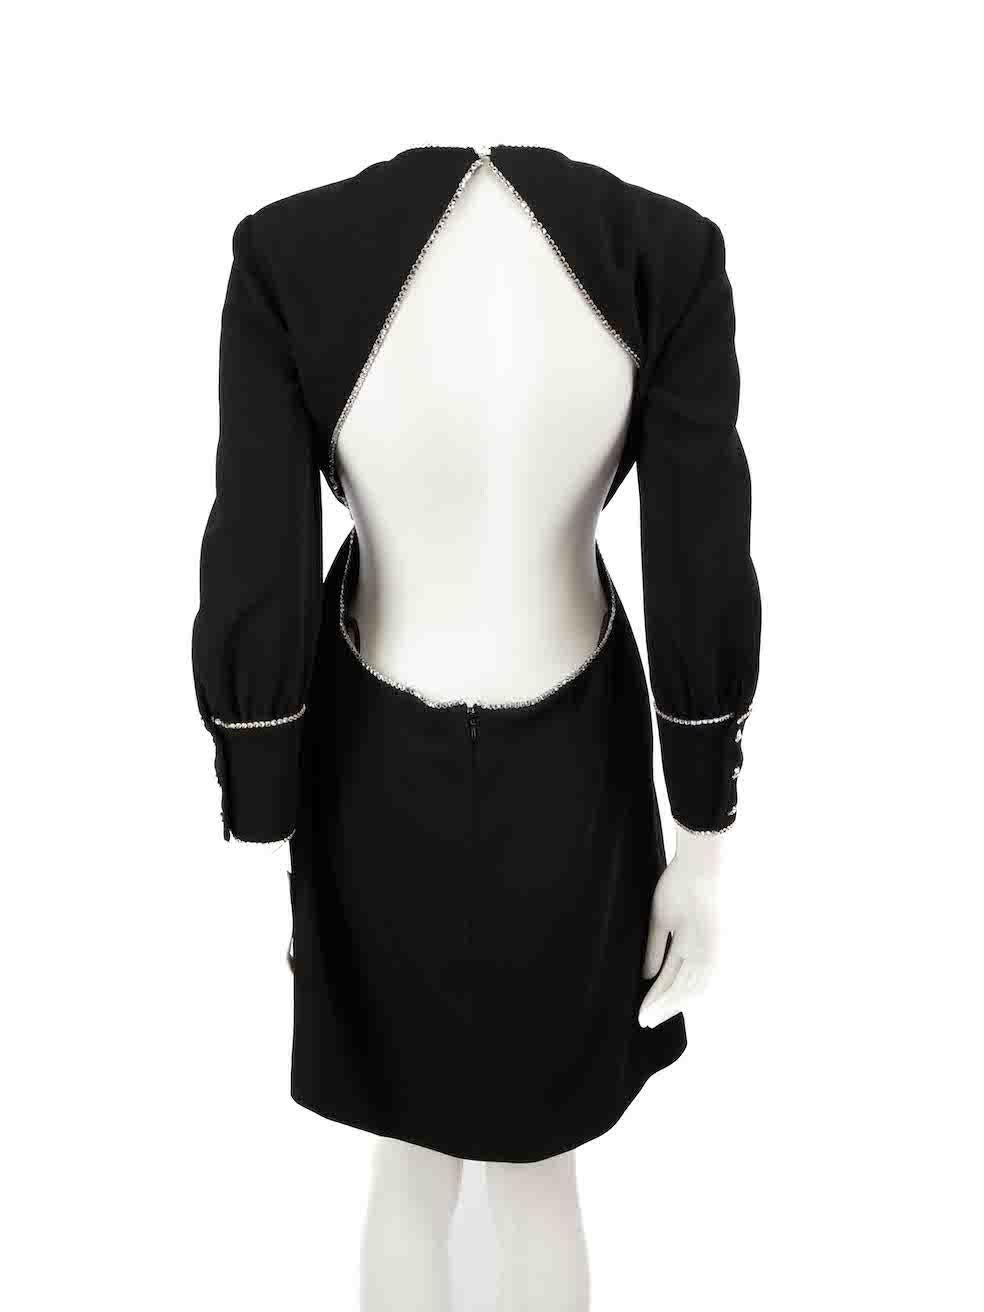 Miu Miu Black Embellished Open Back Dress Size L Excellent état - En vente à London, GB